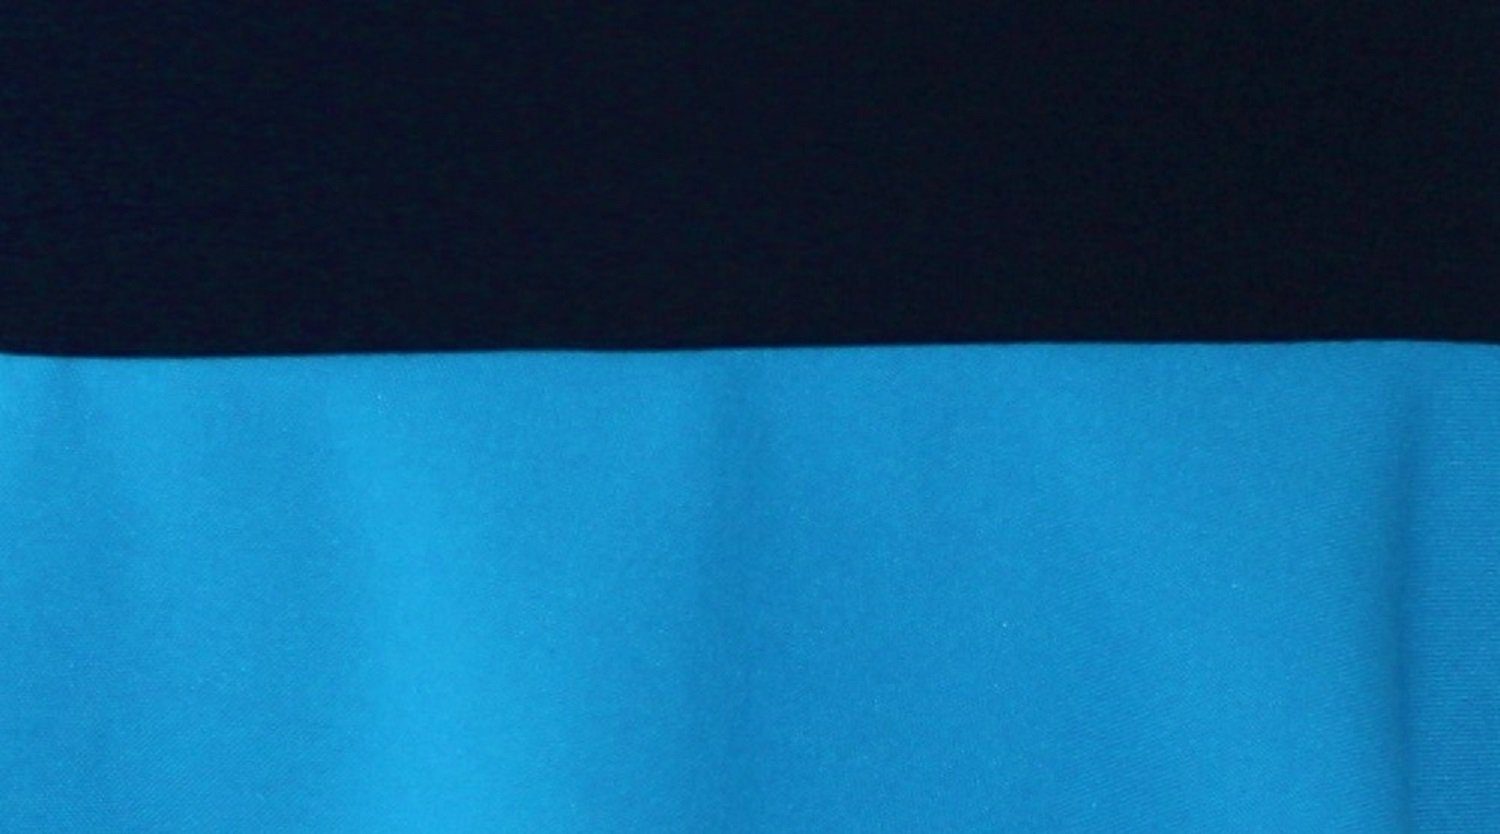 Ballonrock Lila Marine design Blau Bund Türkis dunkle 51cm elastischer